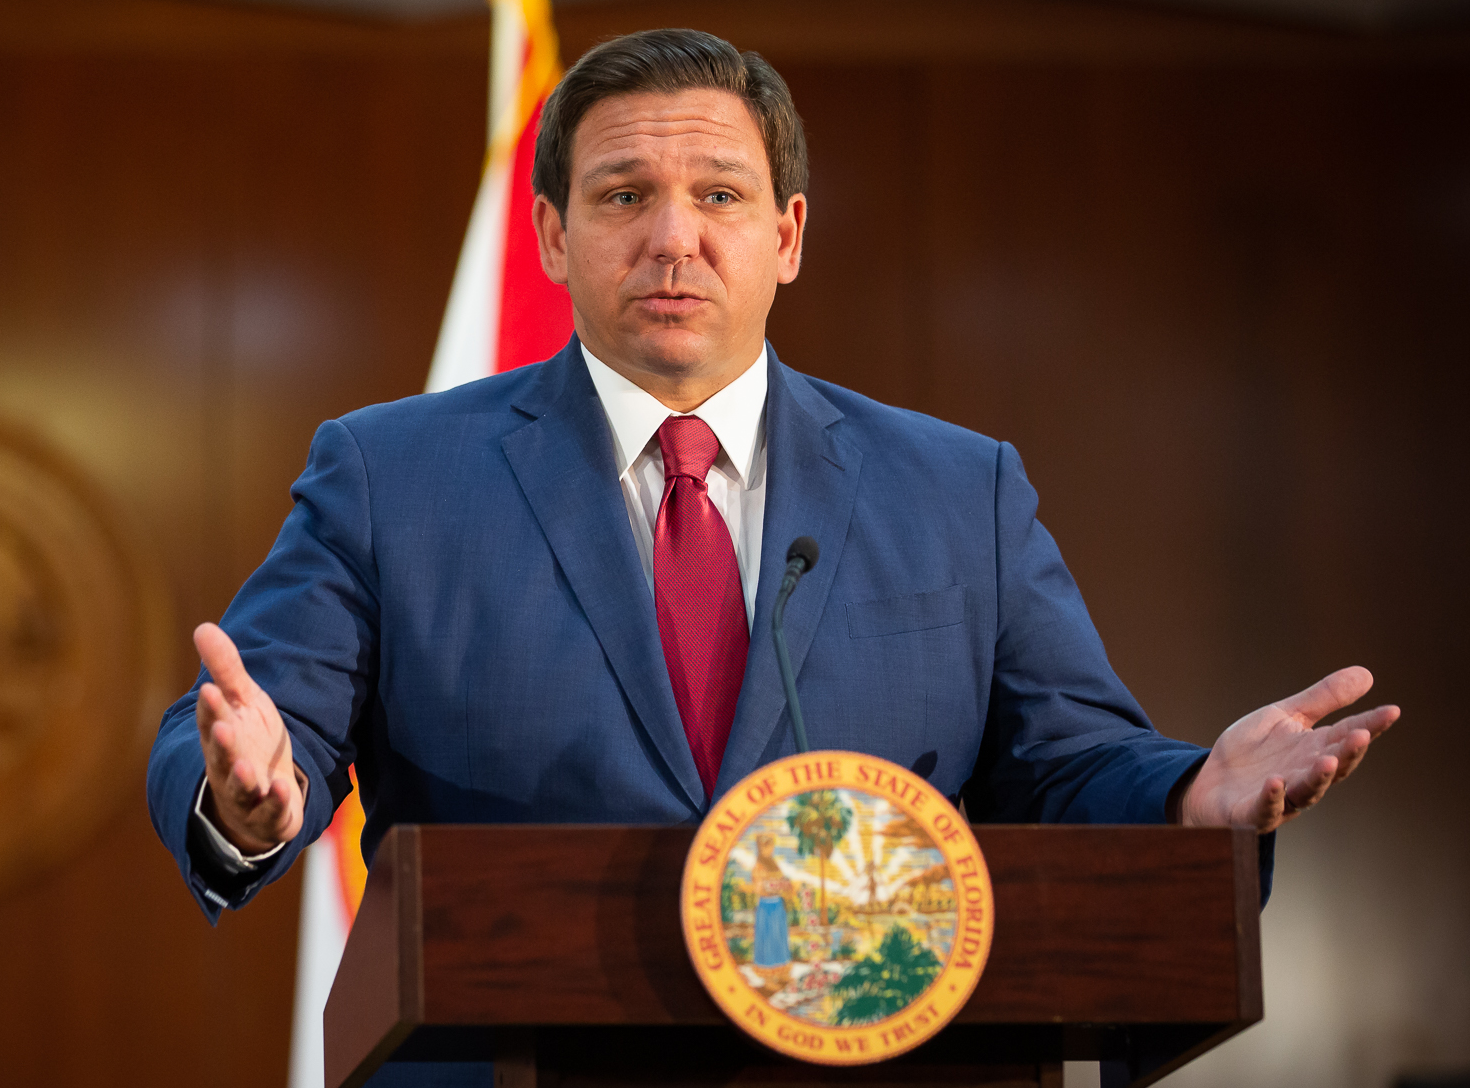 Florida teach-in seeks to counter Gov. DeSantis's policies